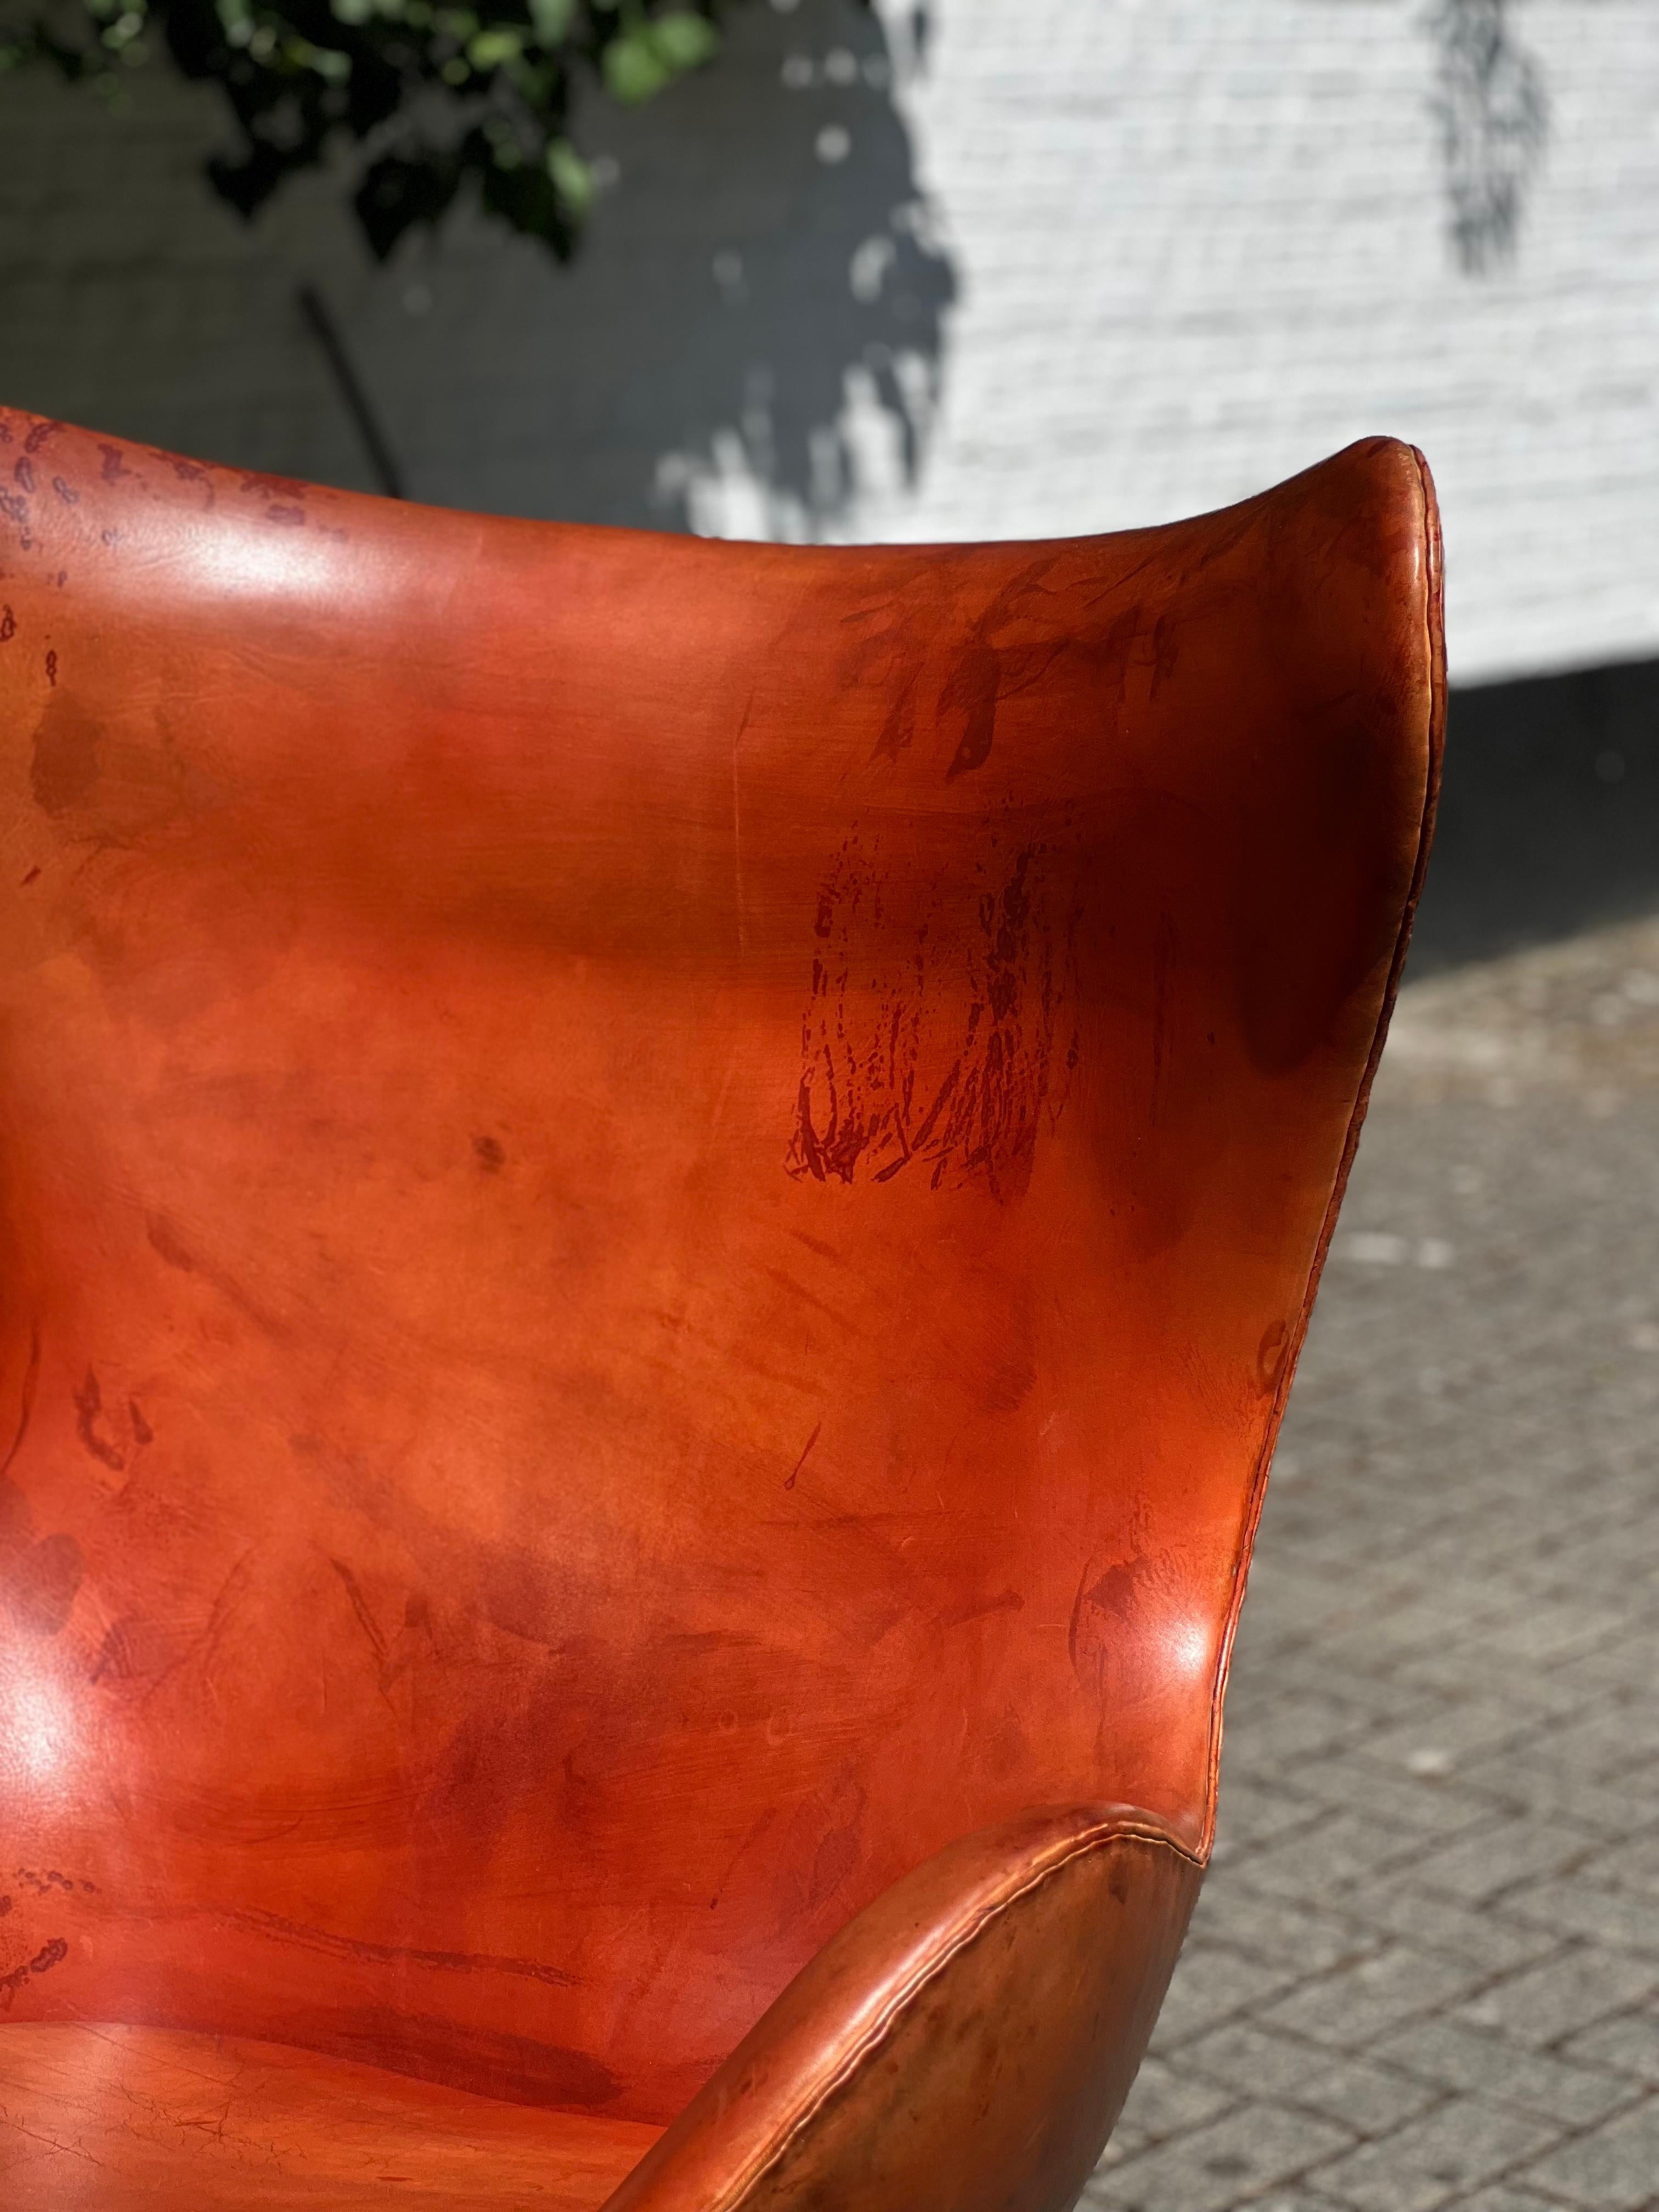 Scandinavian Modern Arne Jacobsen Iconic Egg Chair Cognac Leather Early 60s Original Fritz Hansen For Sale